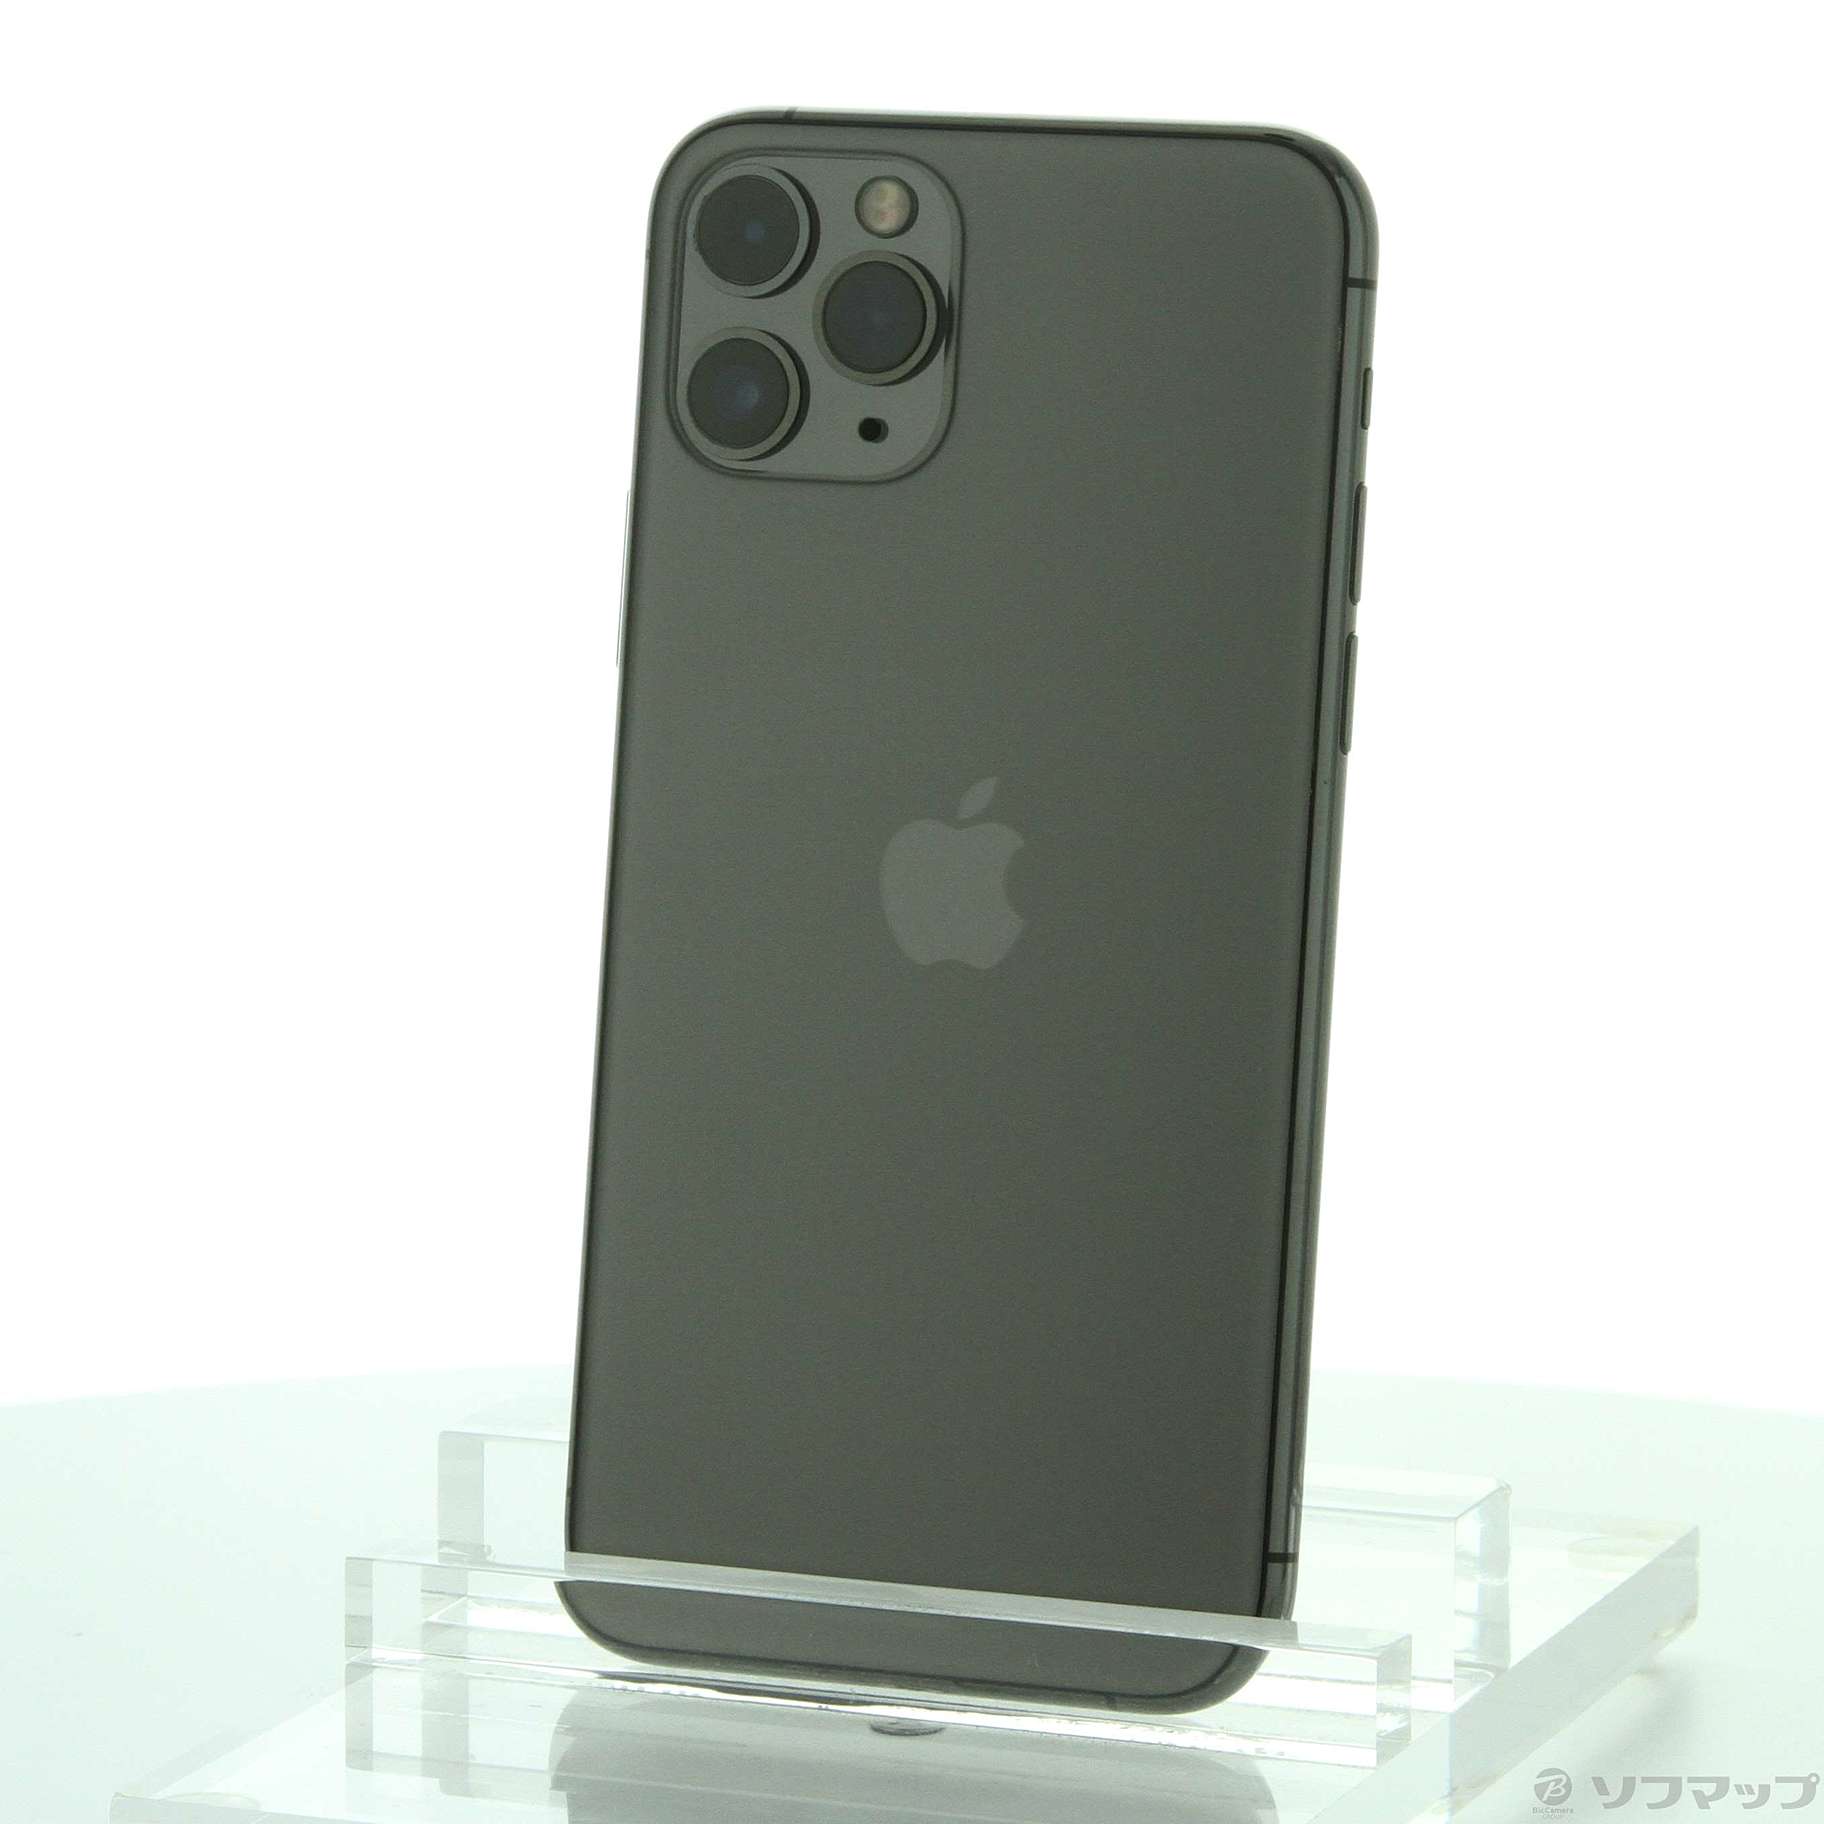 iPhone 11 Pro 256 SIMフリー ジャンク(詳細は説明欄を参照)